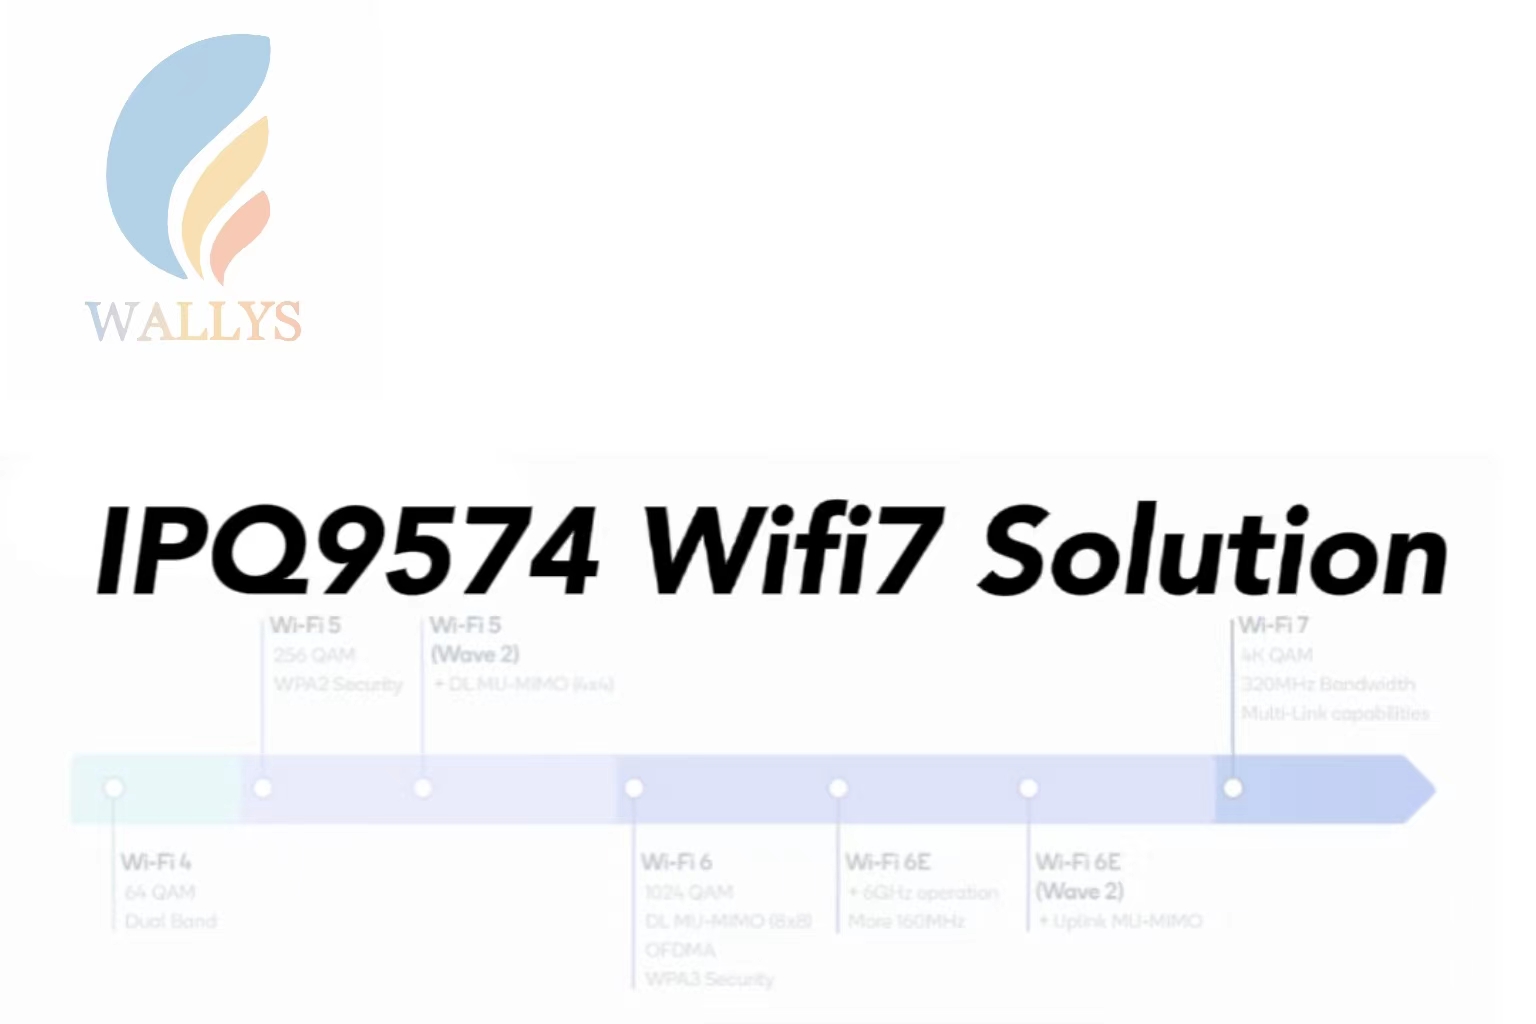 IPQ9574 IPQ9570 Pro 1620 Qualcomm WIFI7 solution|Wallystech